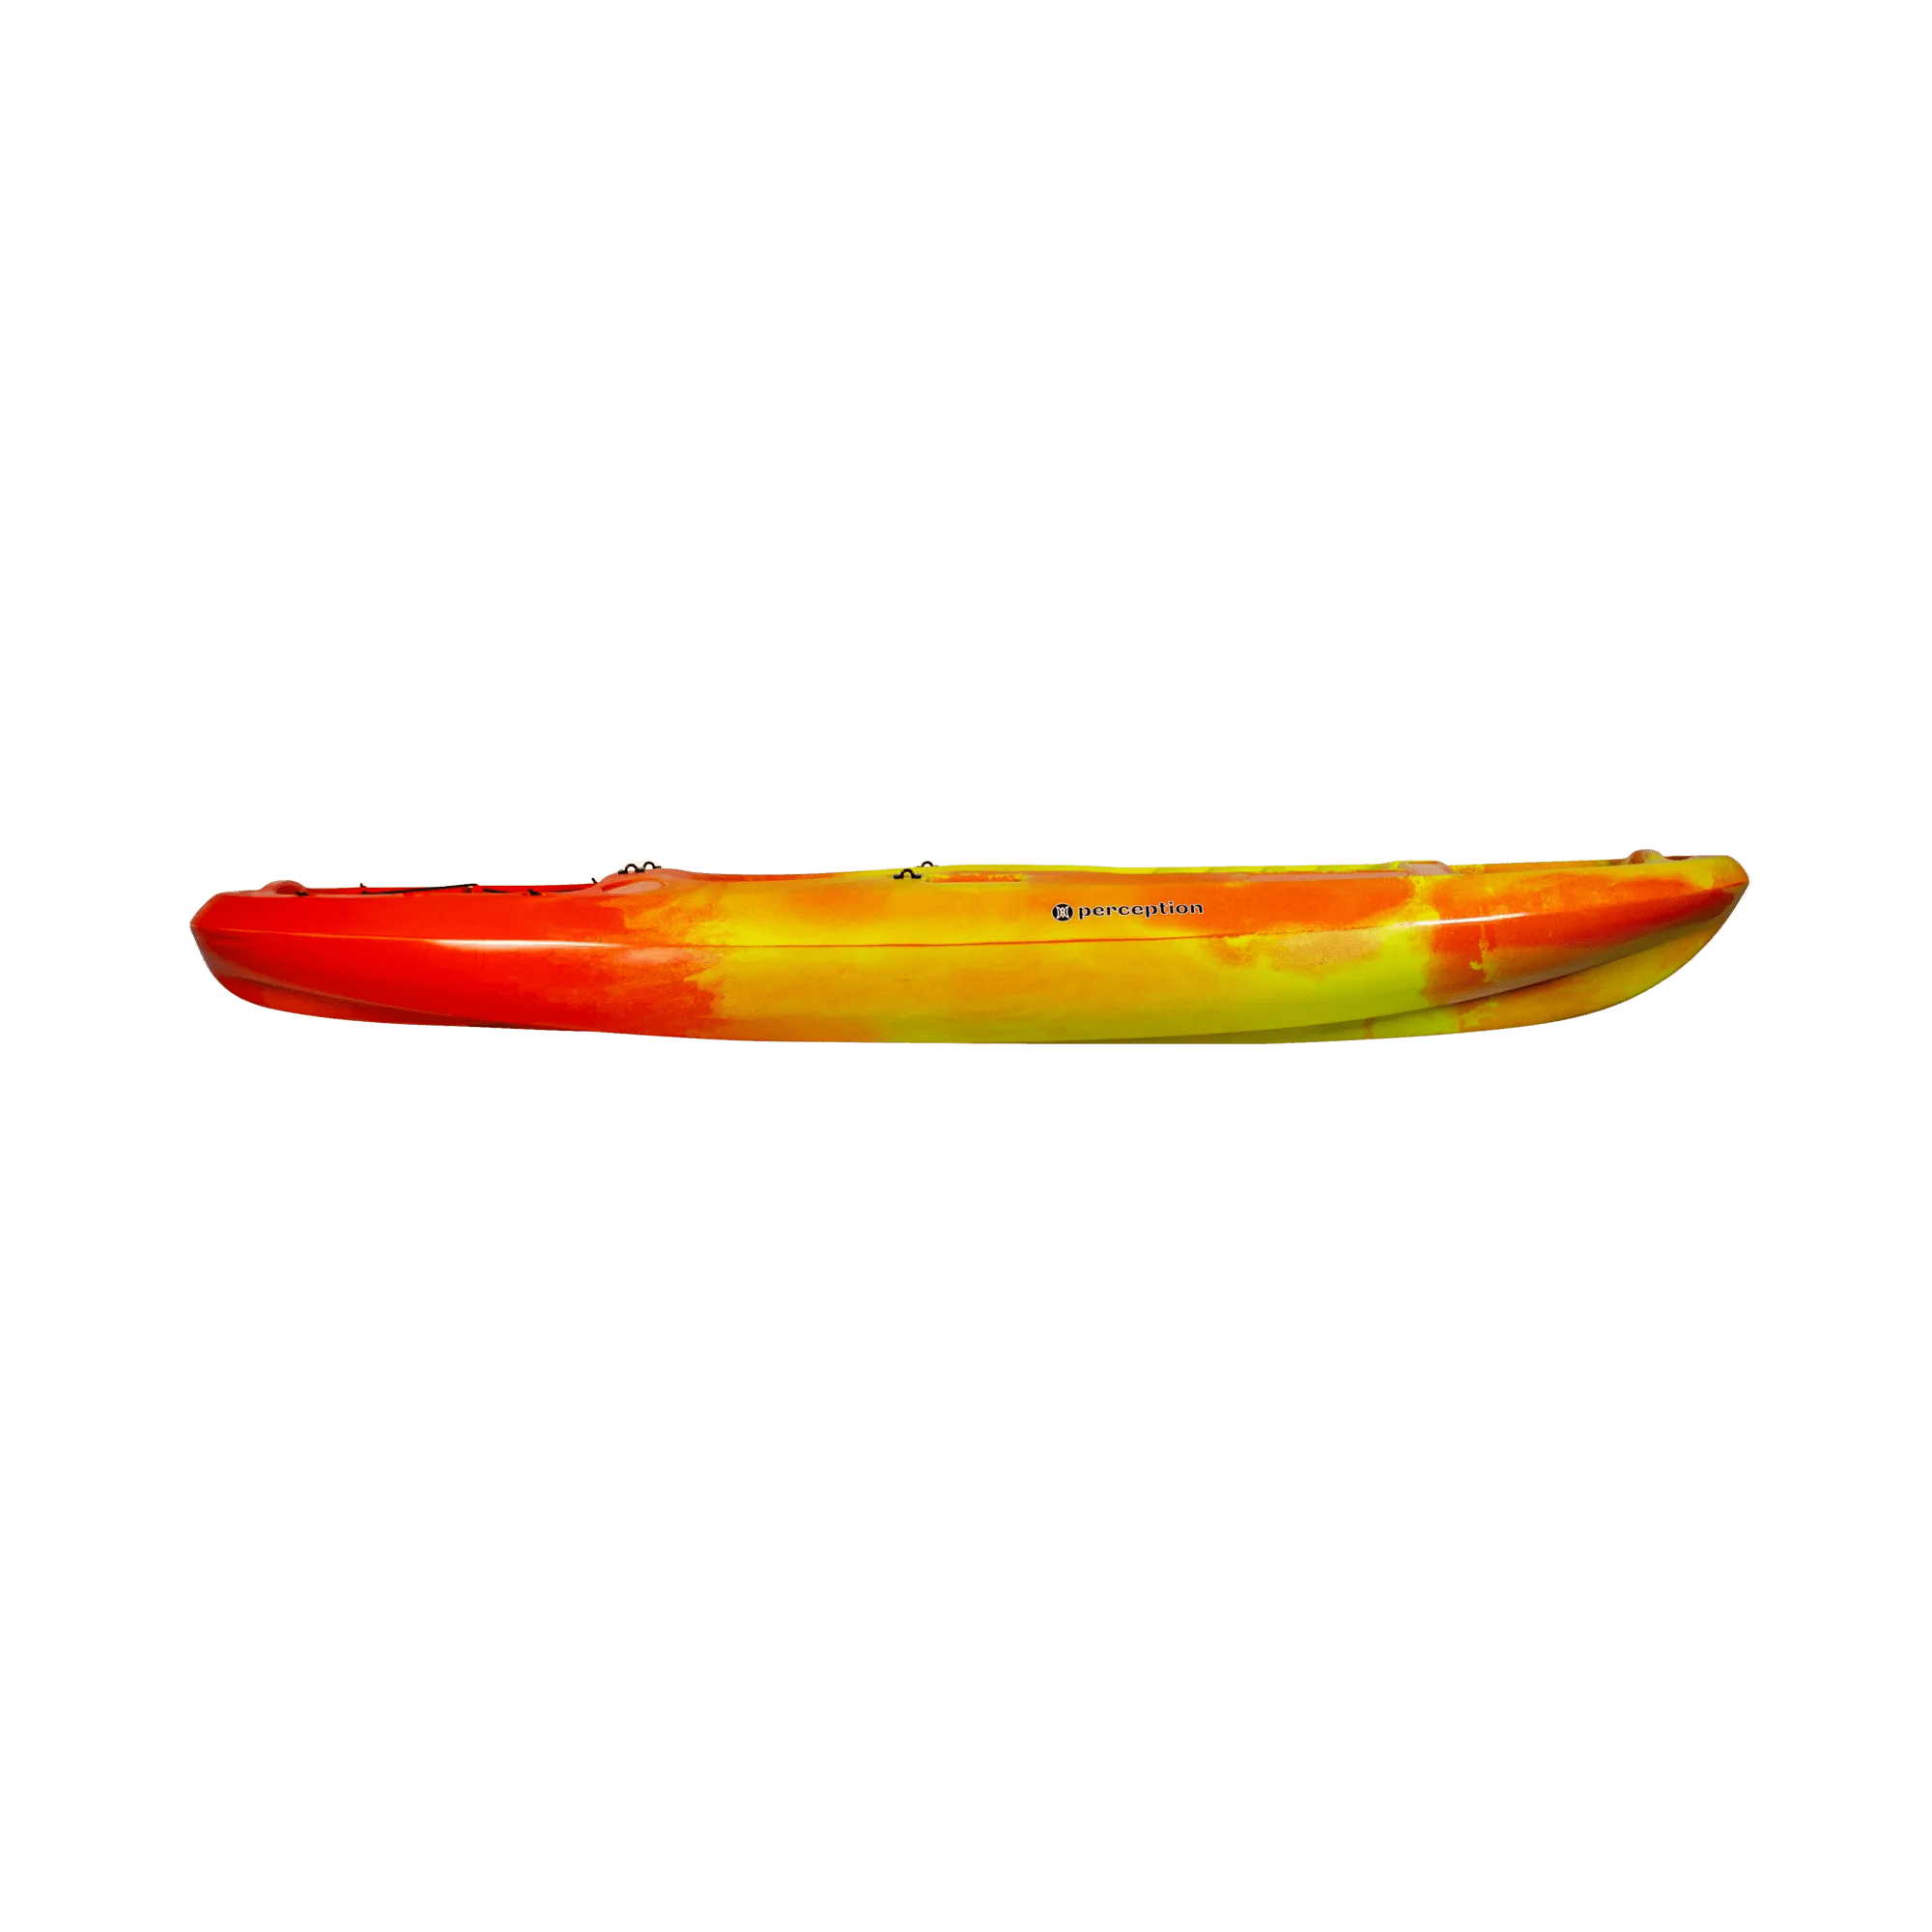 PERCEPTION - Zip 9.5 Recreational Kayak -  - 9351890189 - SIDE